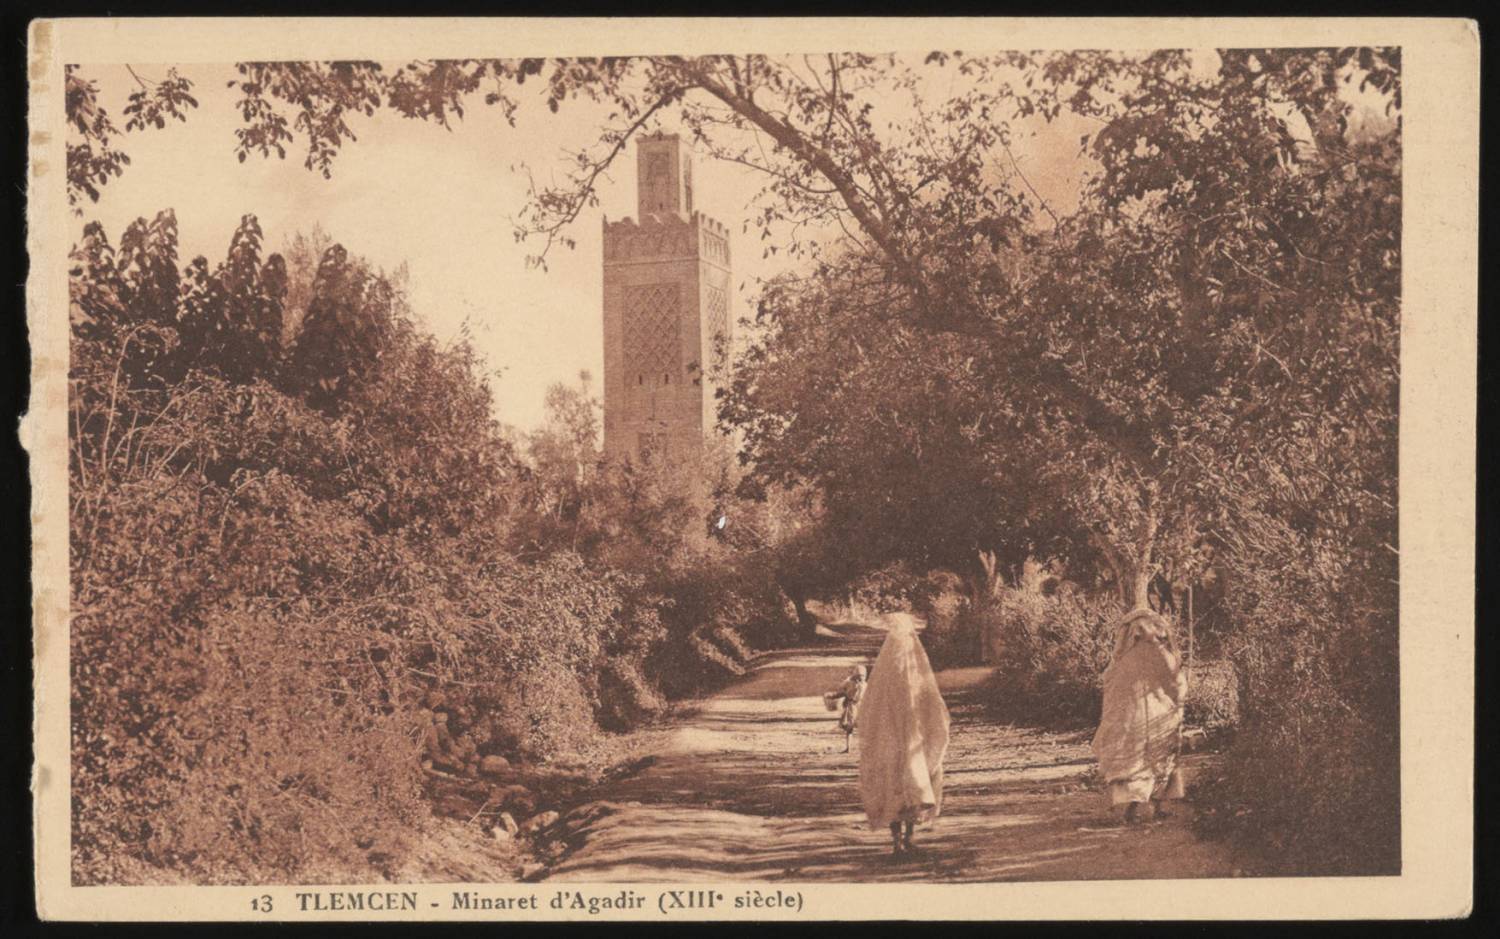 View of a pedestrian walking toward the Minaret of Agadir in Tlemcen (13th century)<br>